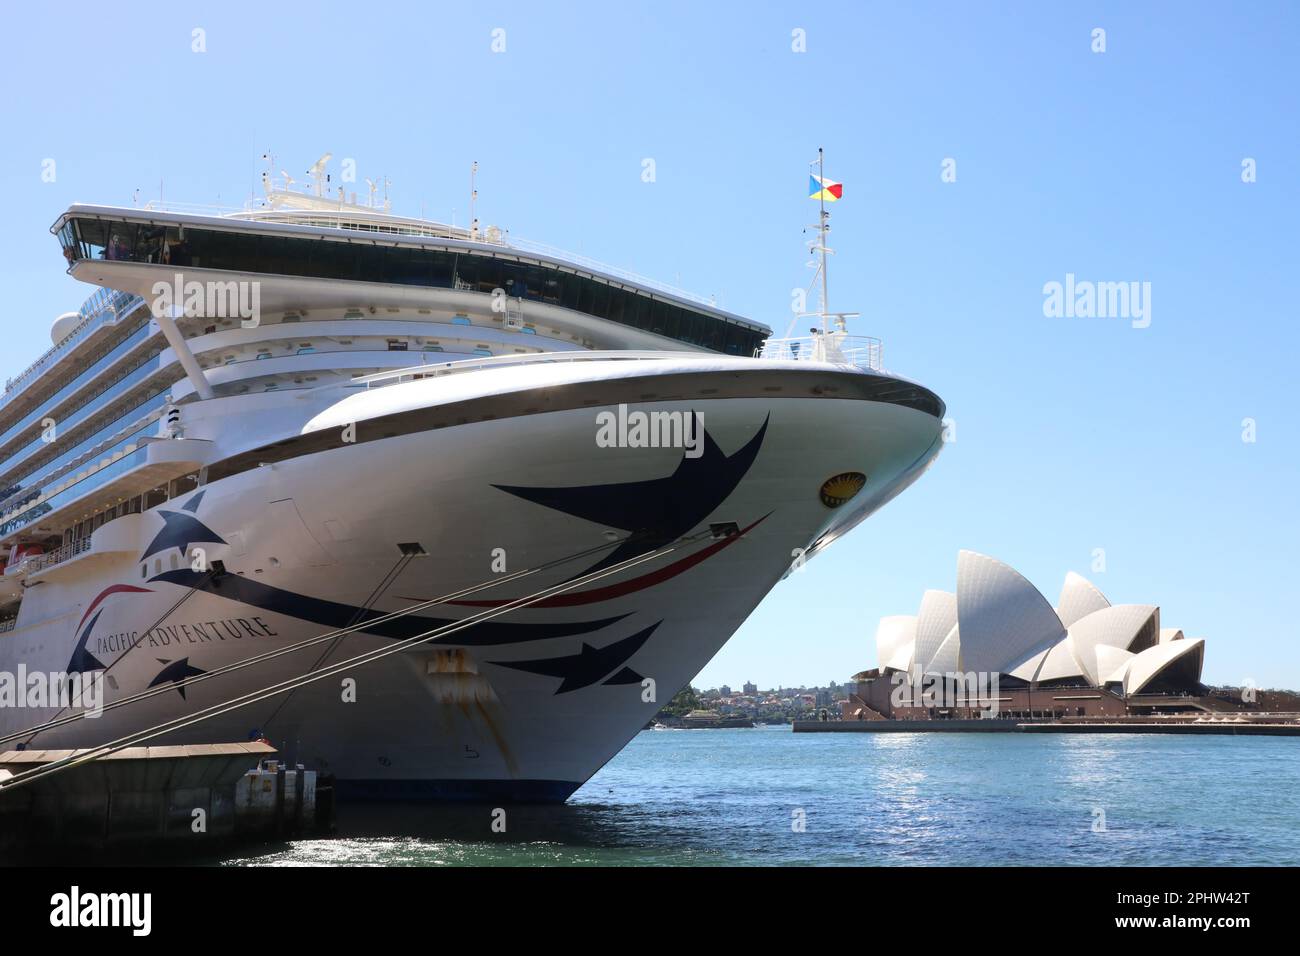 Sydney, Australia. 30th March 2023. P&O Cruises Australia's Pacific Adventure moored at the Overseas Passenger Terminal. Credit: Richard Milnes/Alamy Stock Photo